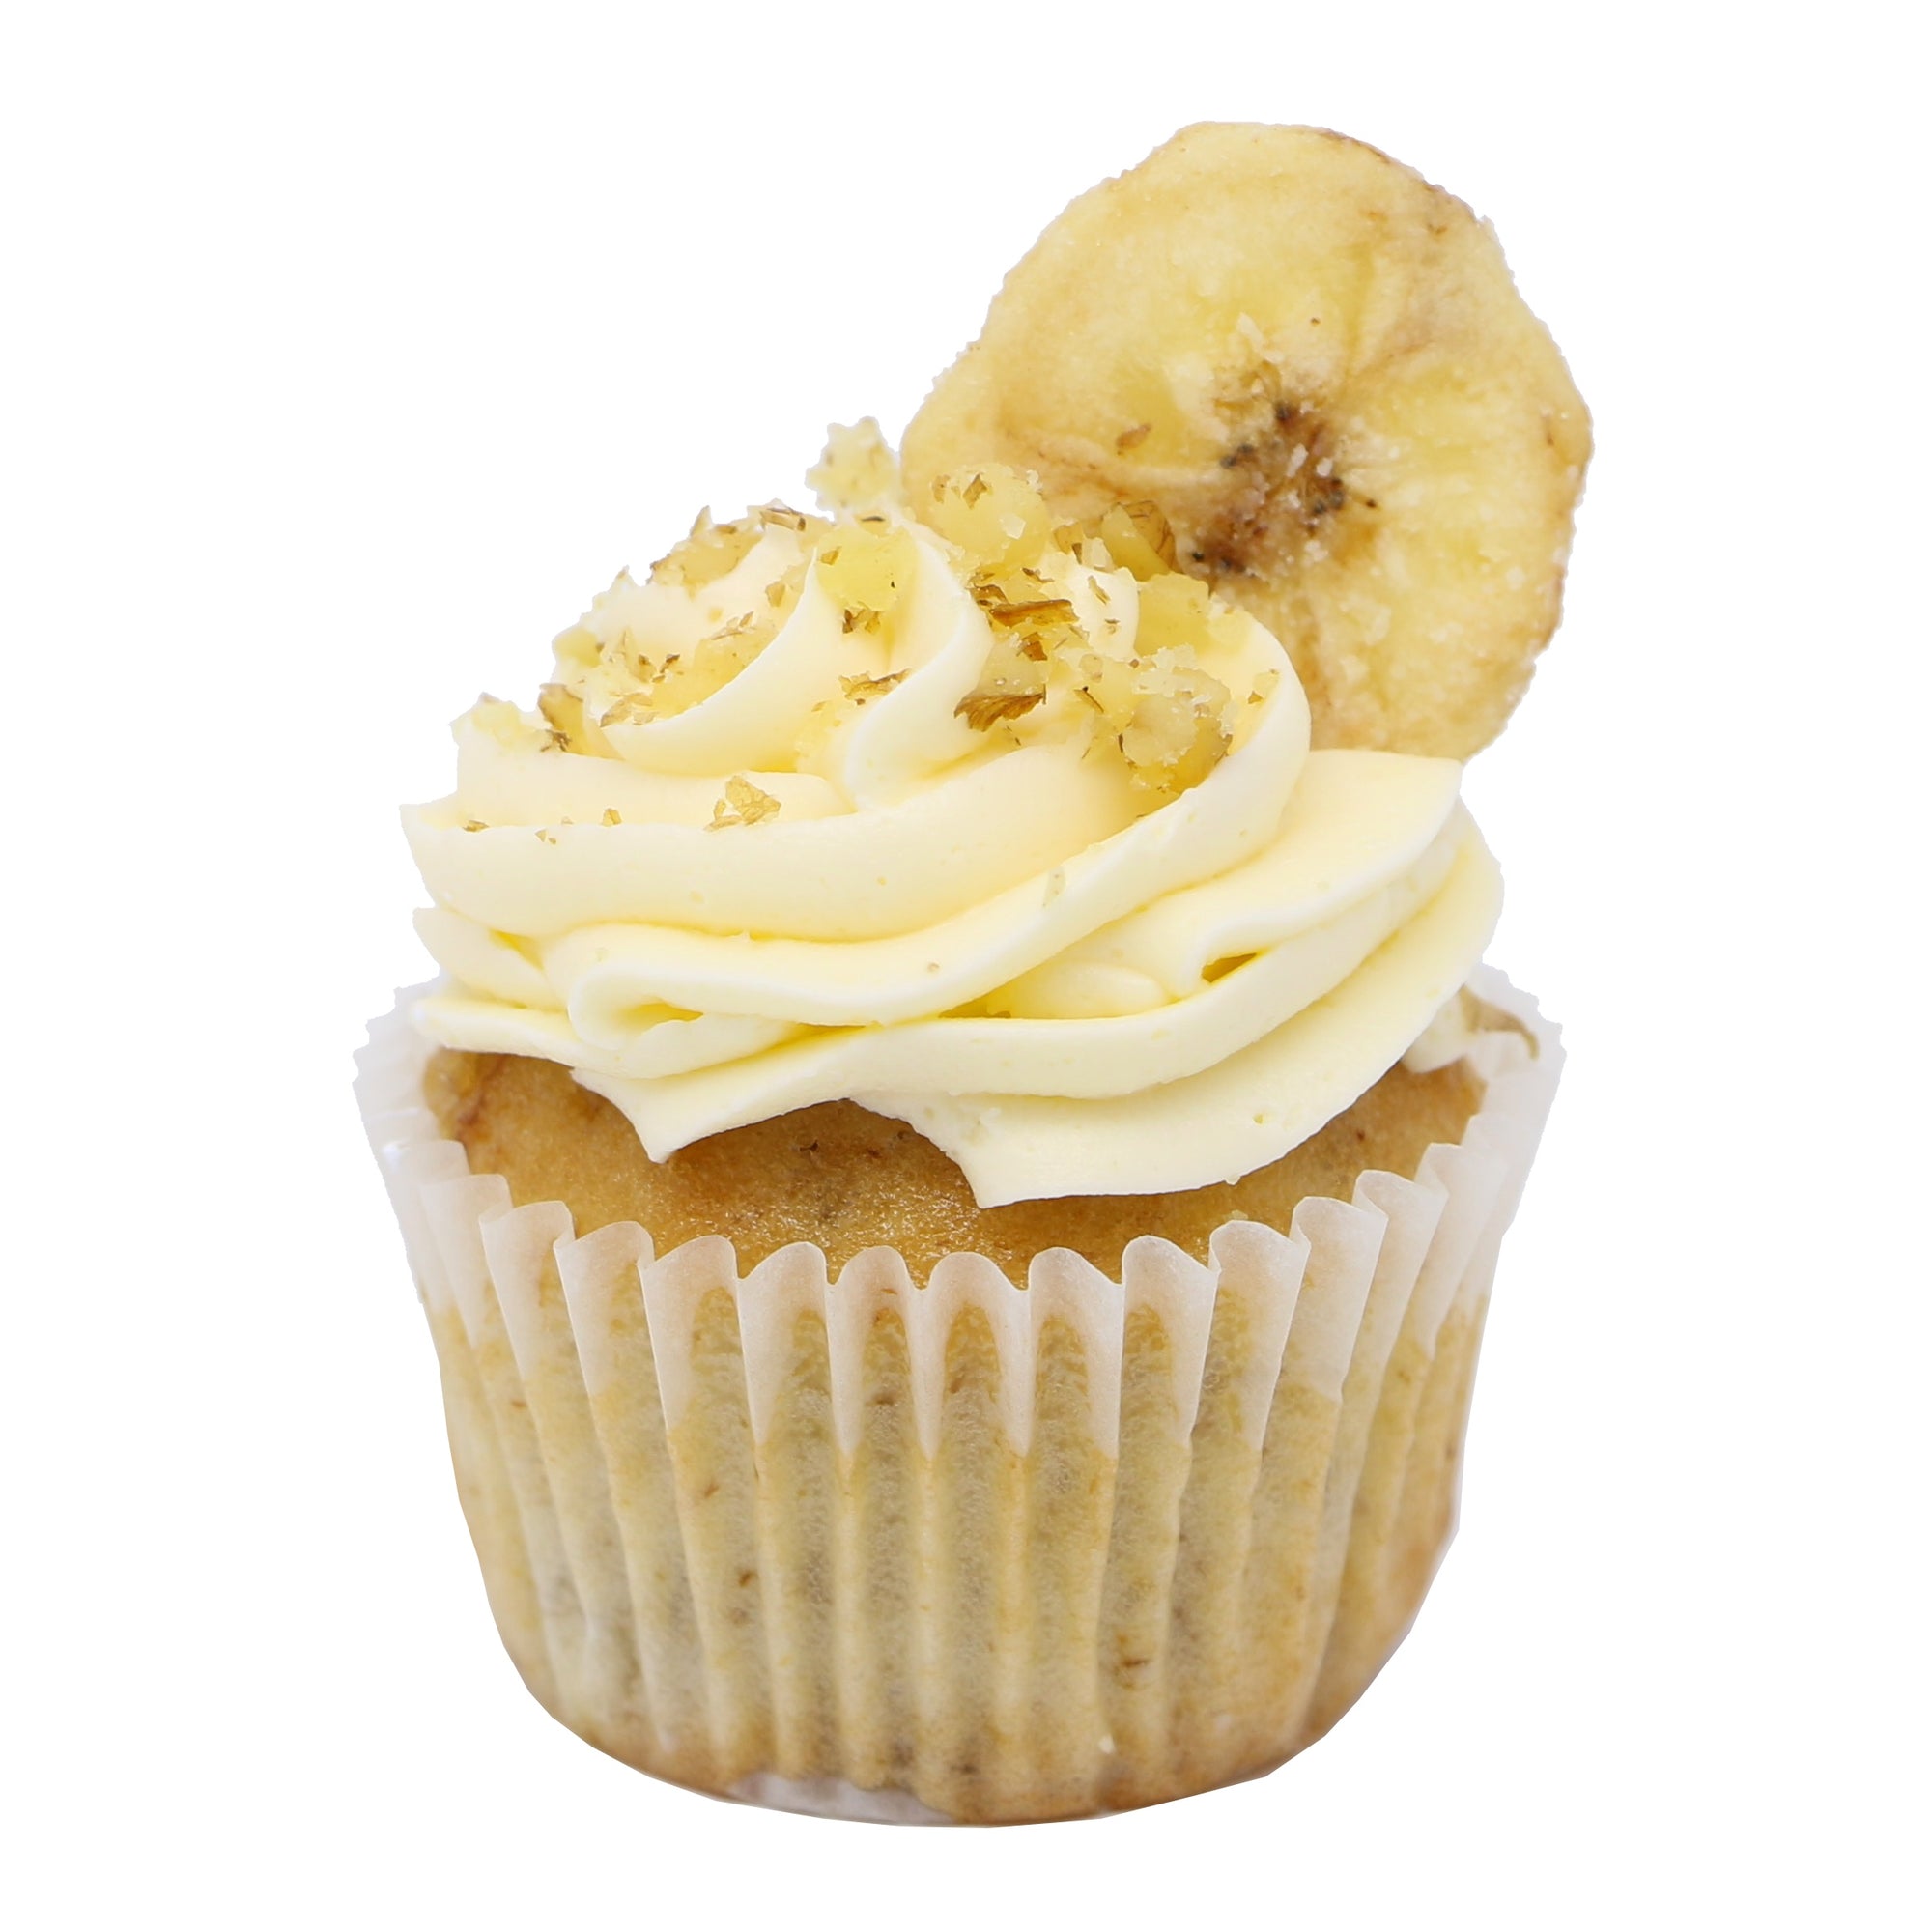 Mini Cupcake - Banana & Walnut - Treats2eat - Wedding & Birthday Party Dessert Catering Near Me